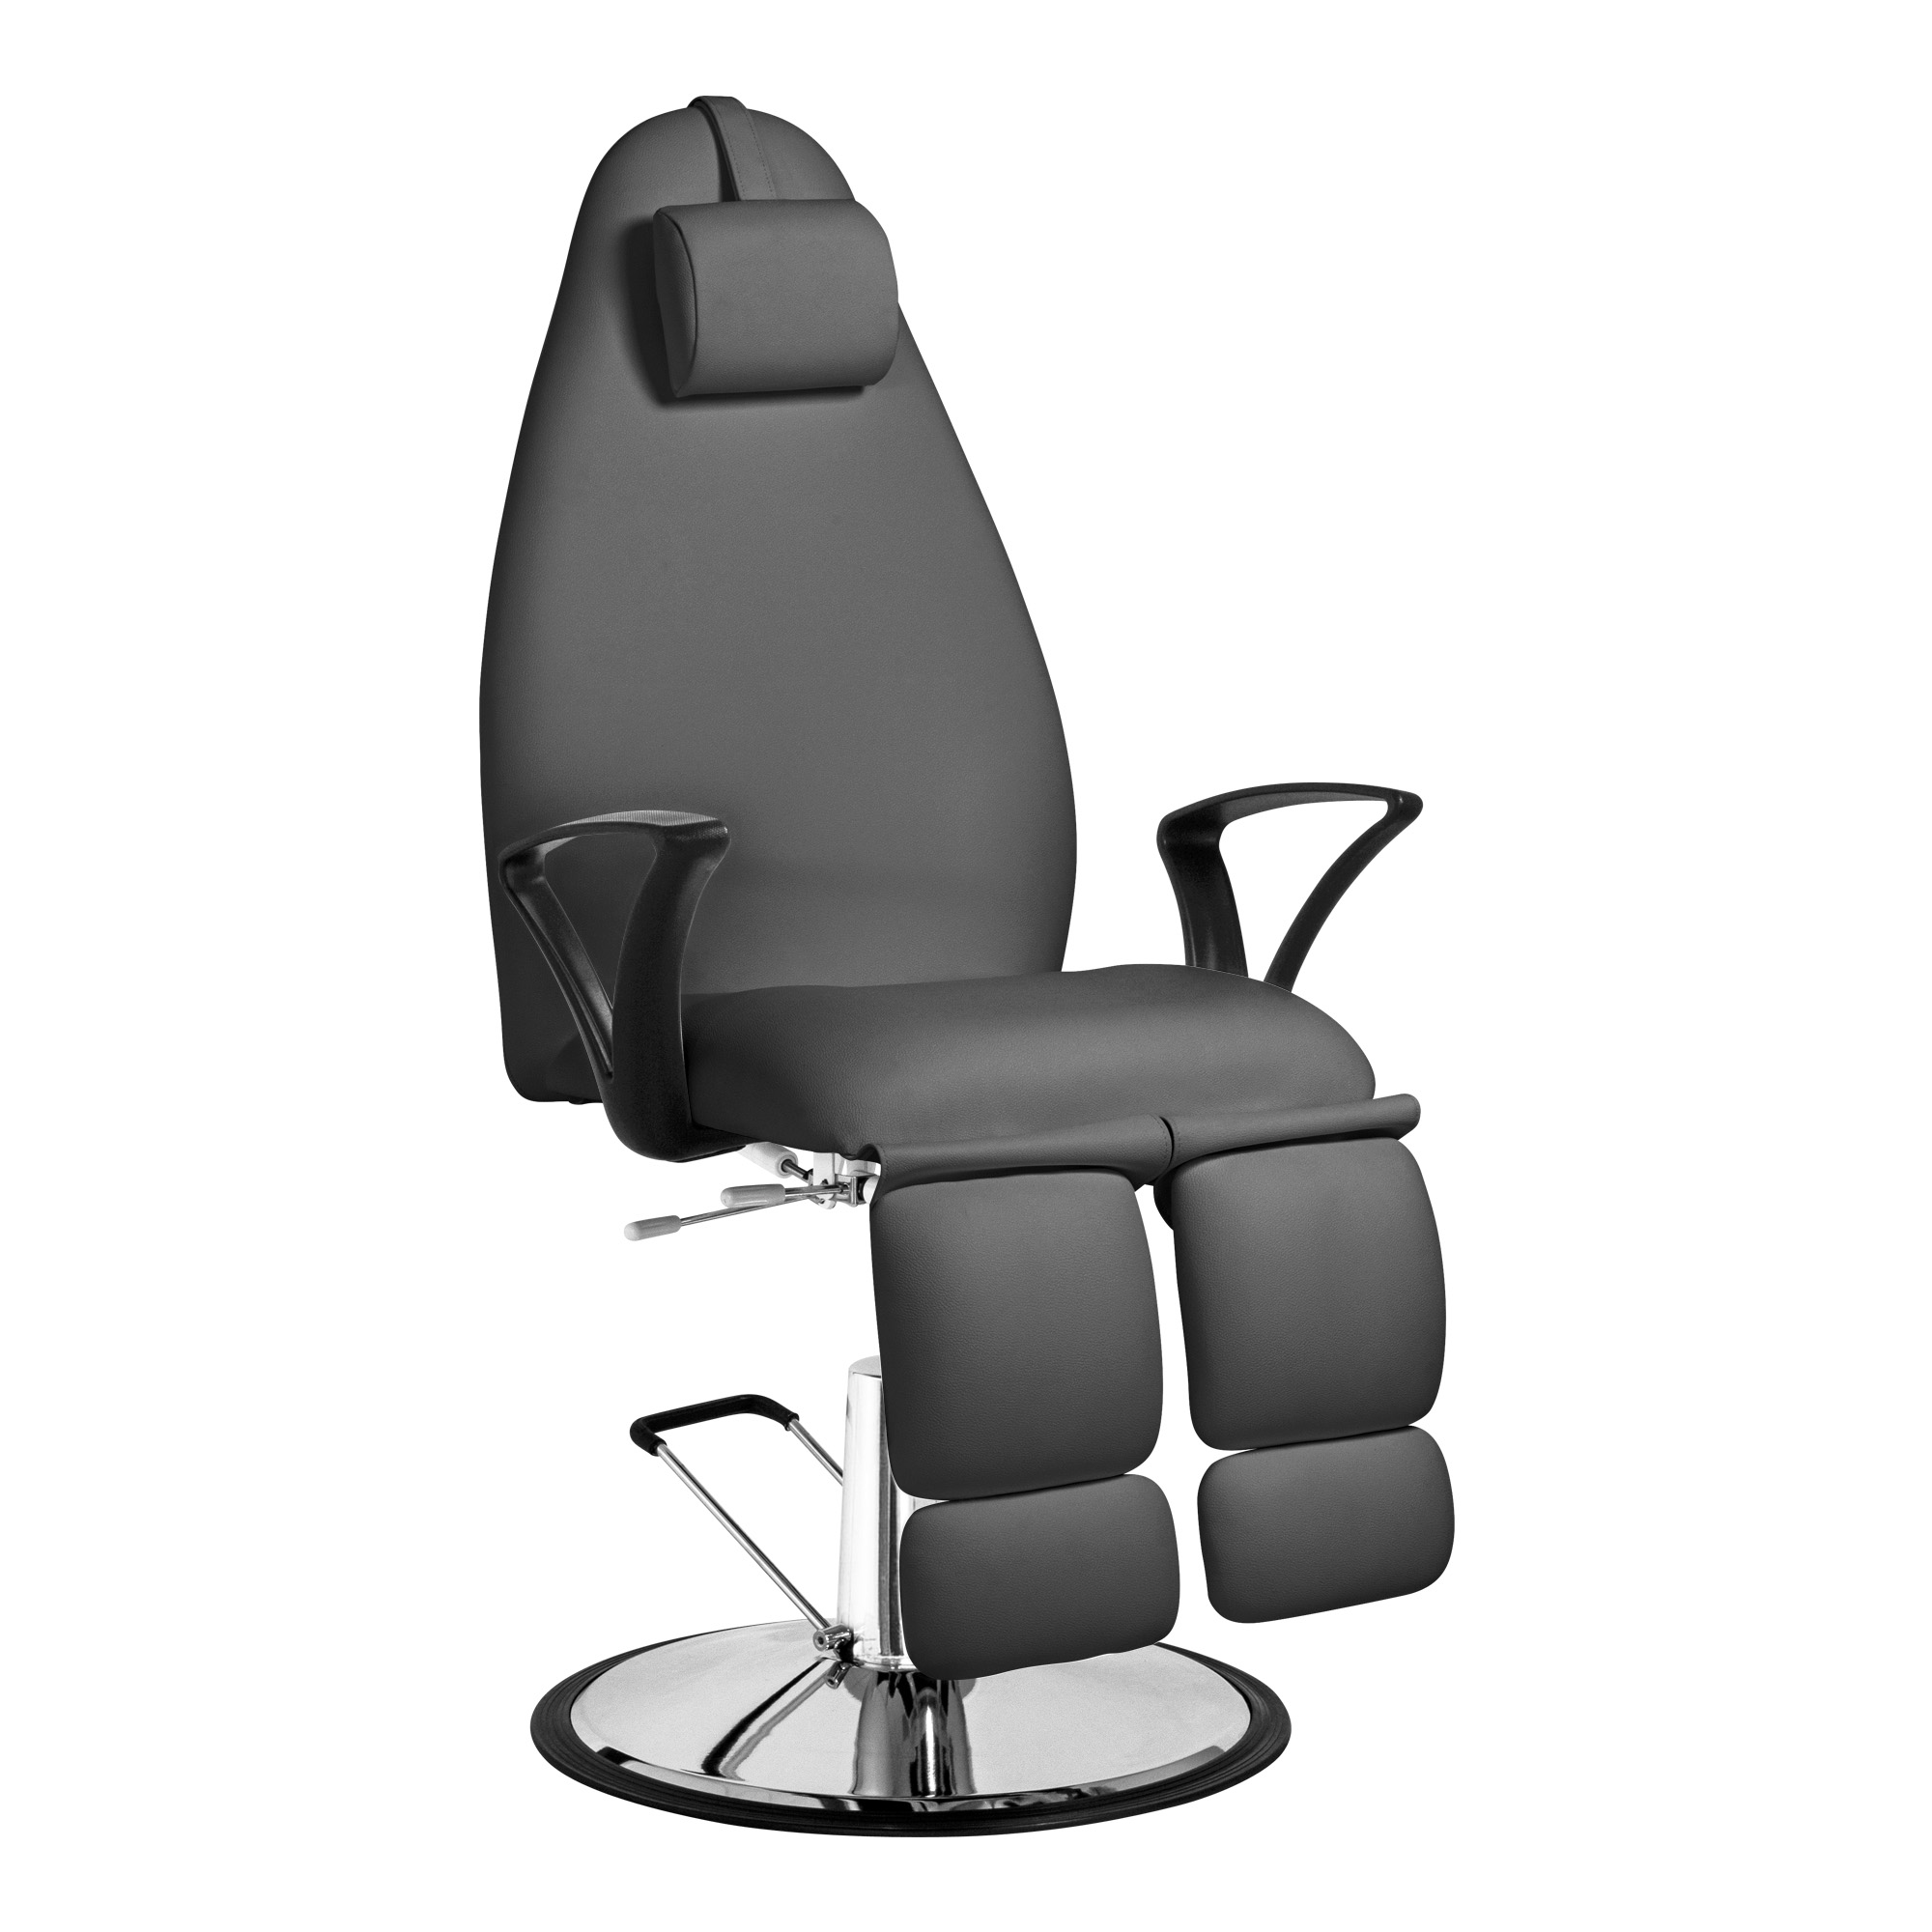 Hydraulic pedicure chair with fixed base dark grey